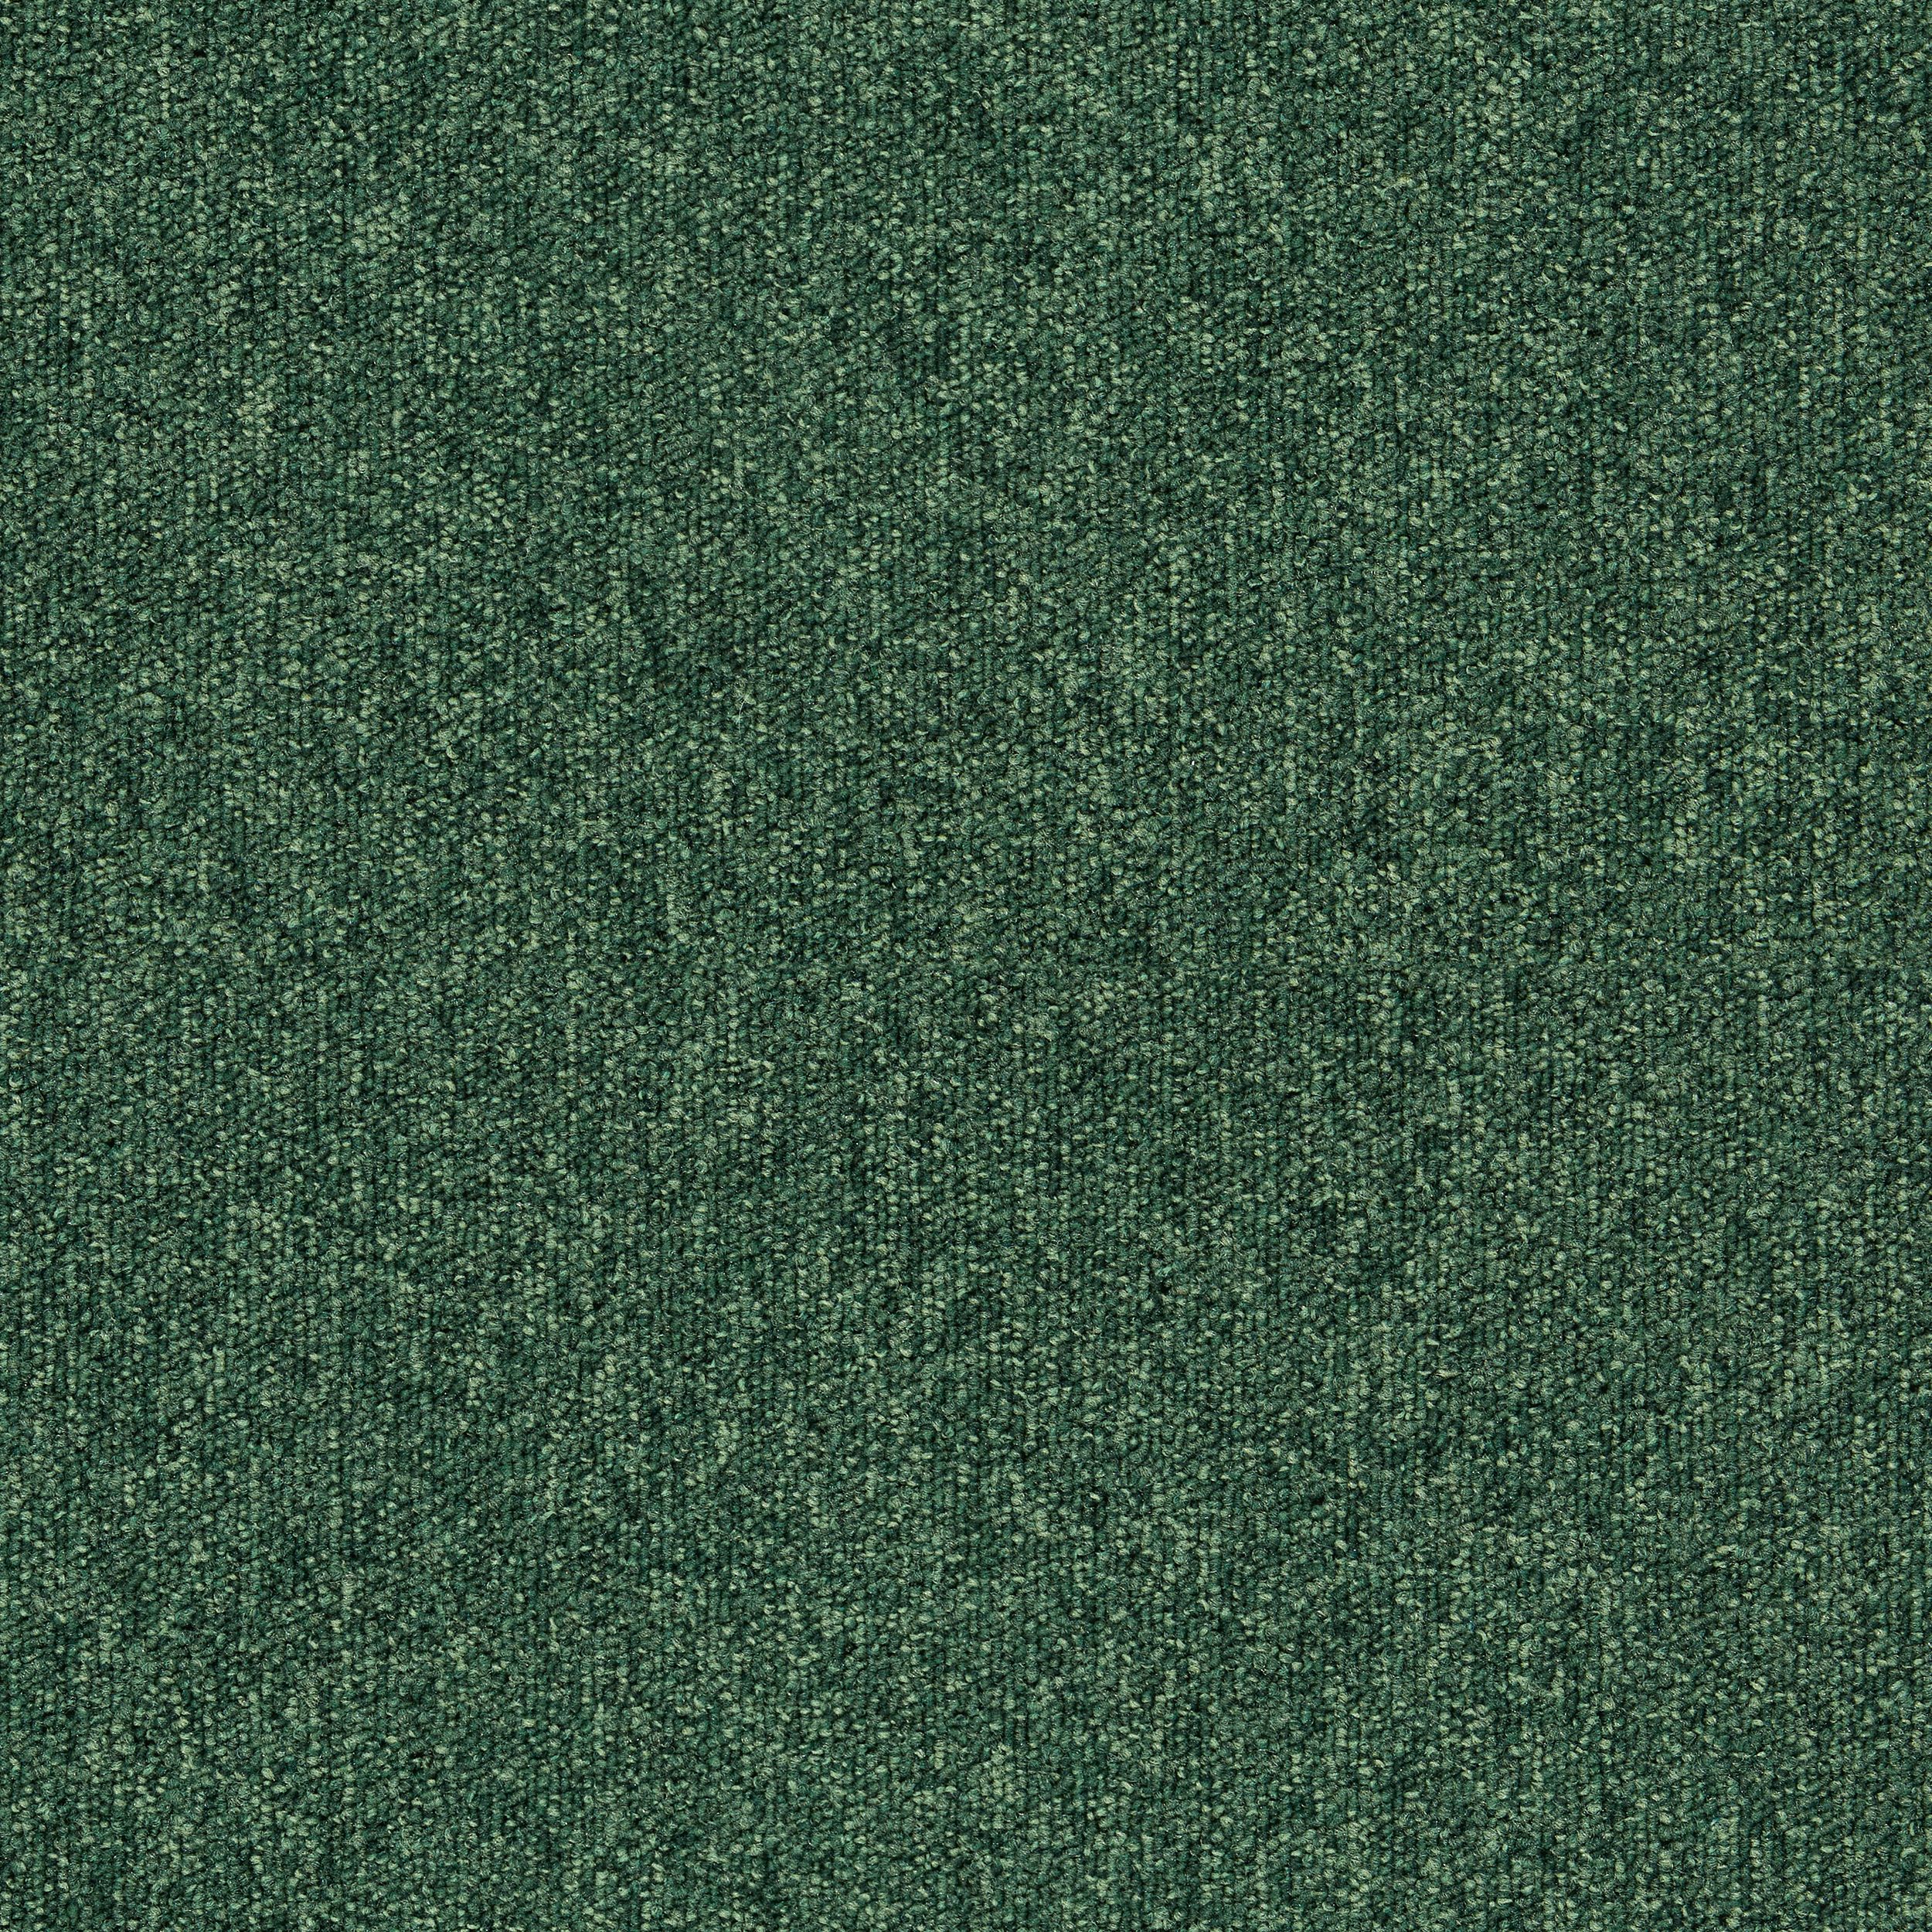 Heuga 727 Carpet Tile In Bottle Green número de imagen 4